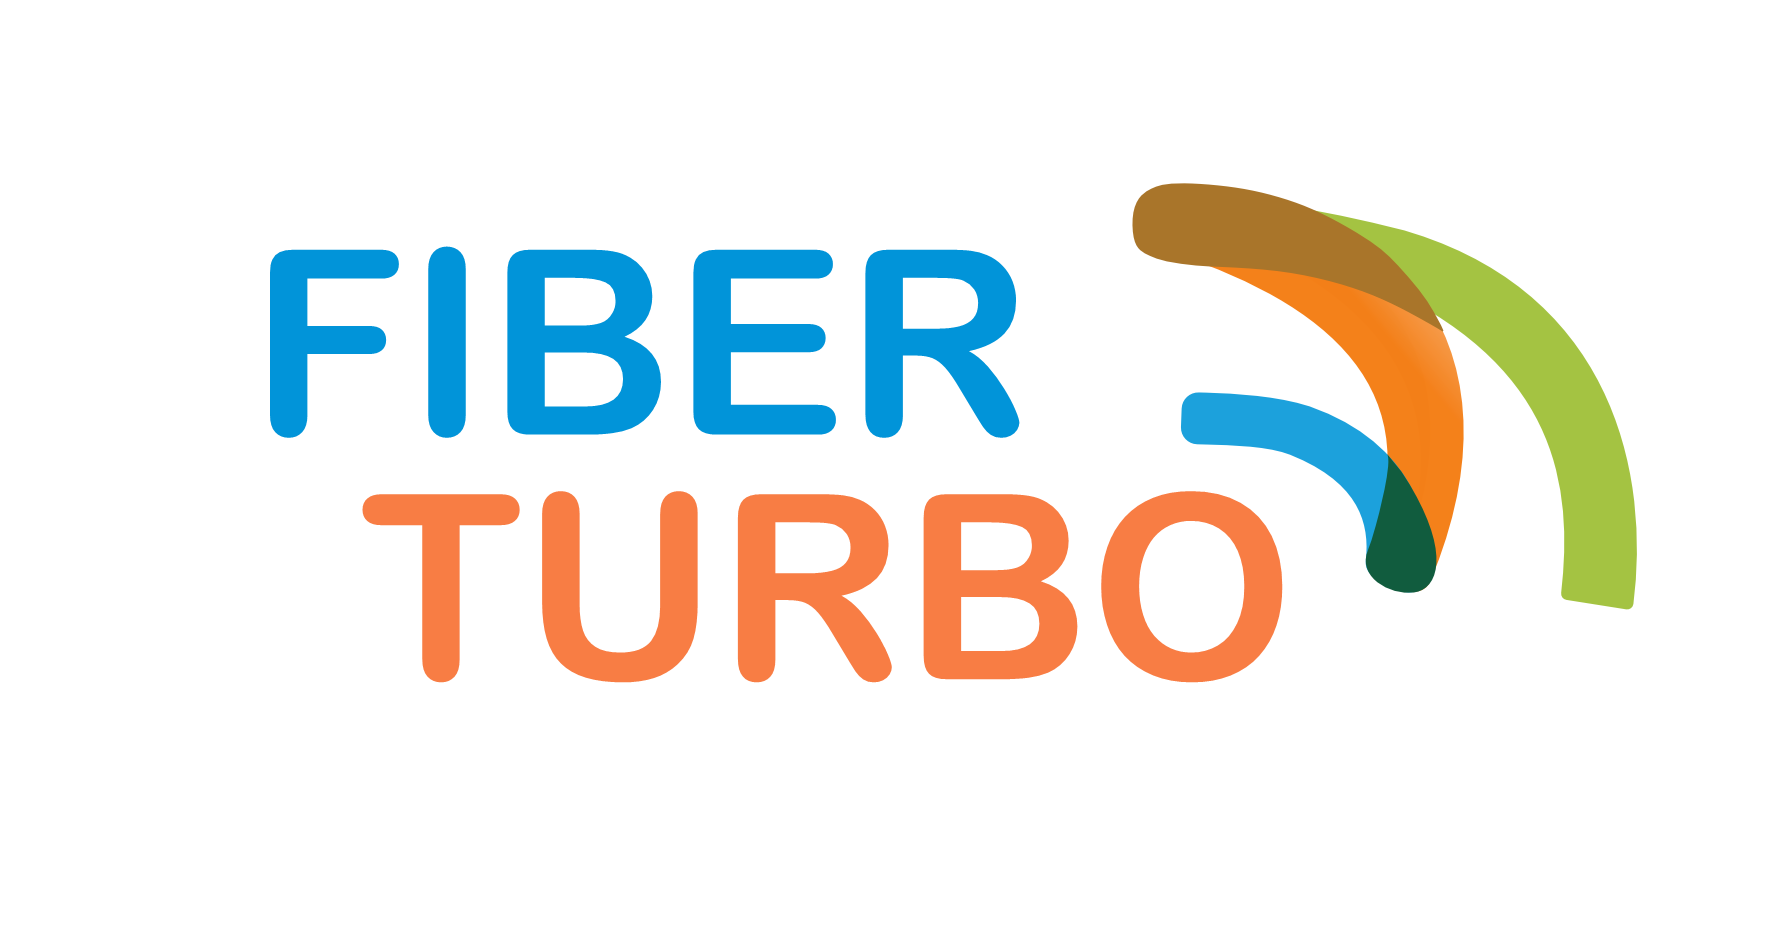 Internet Fibra World Turbo - Contrate planos de internet alta